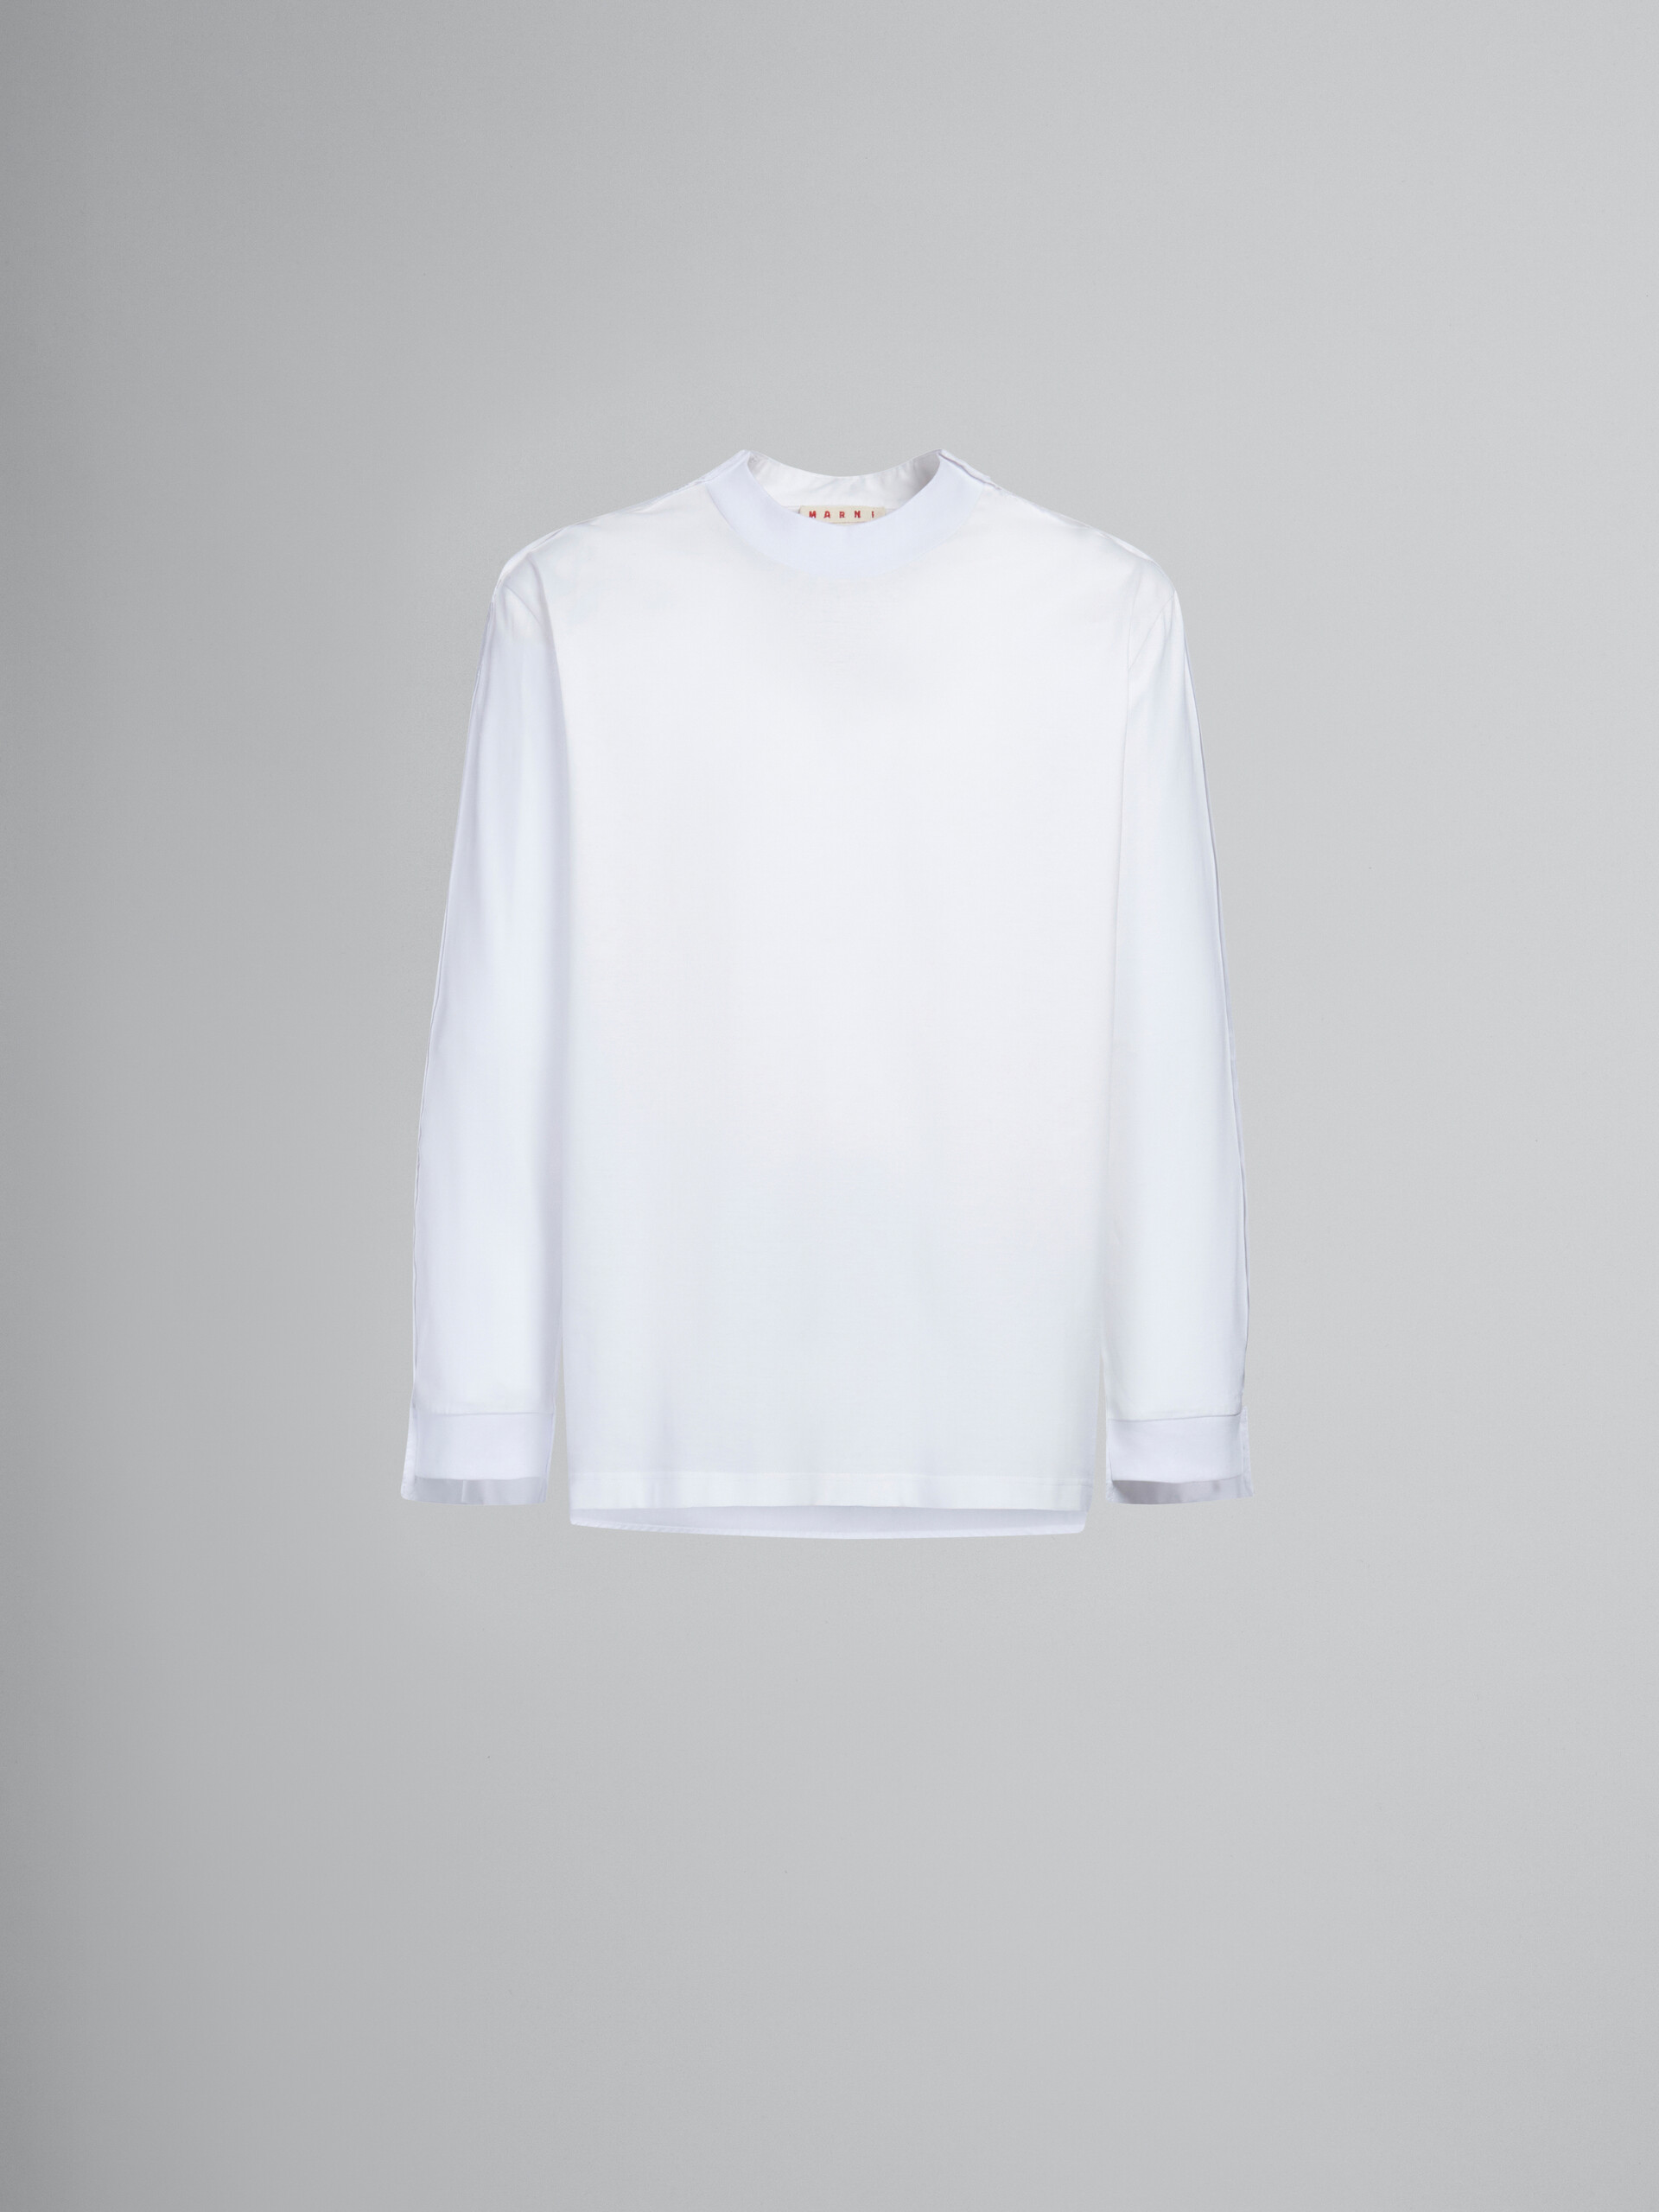 White organic cotton long-sleeved T-shirt with back yoke - T-shirts - Image 1